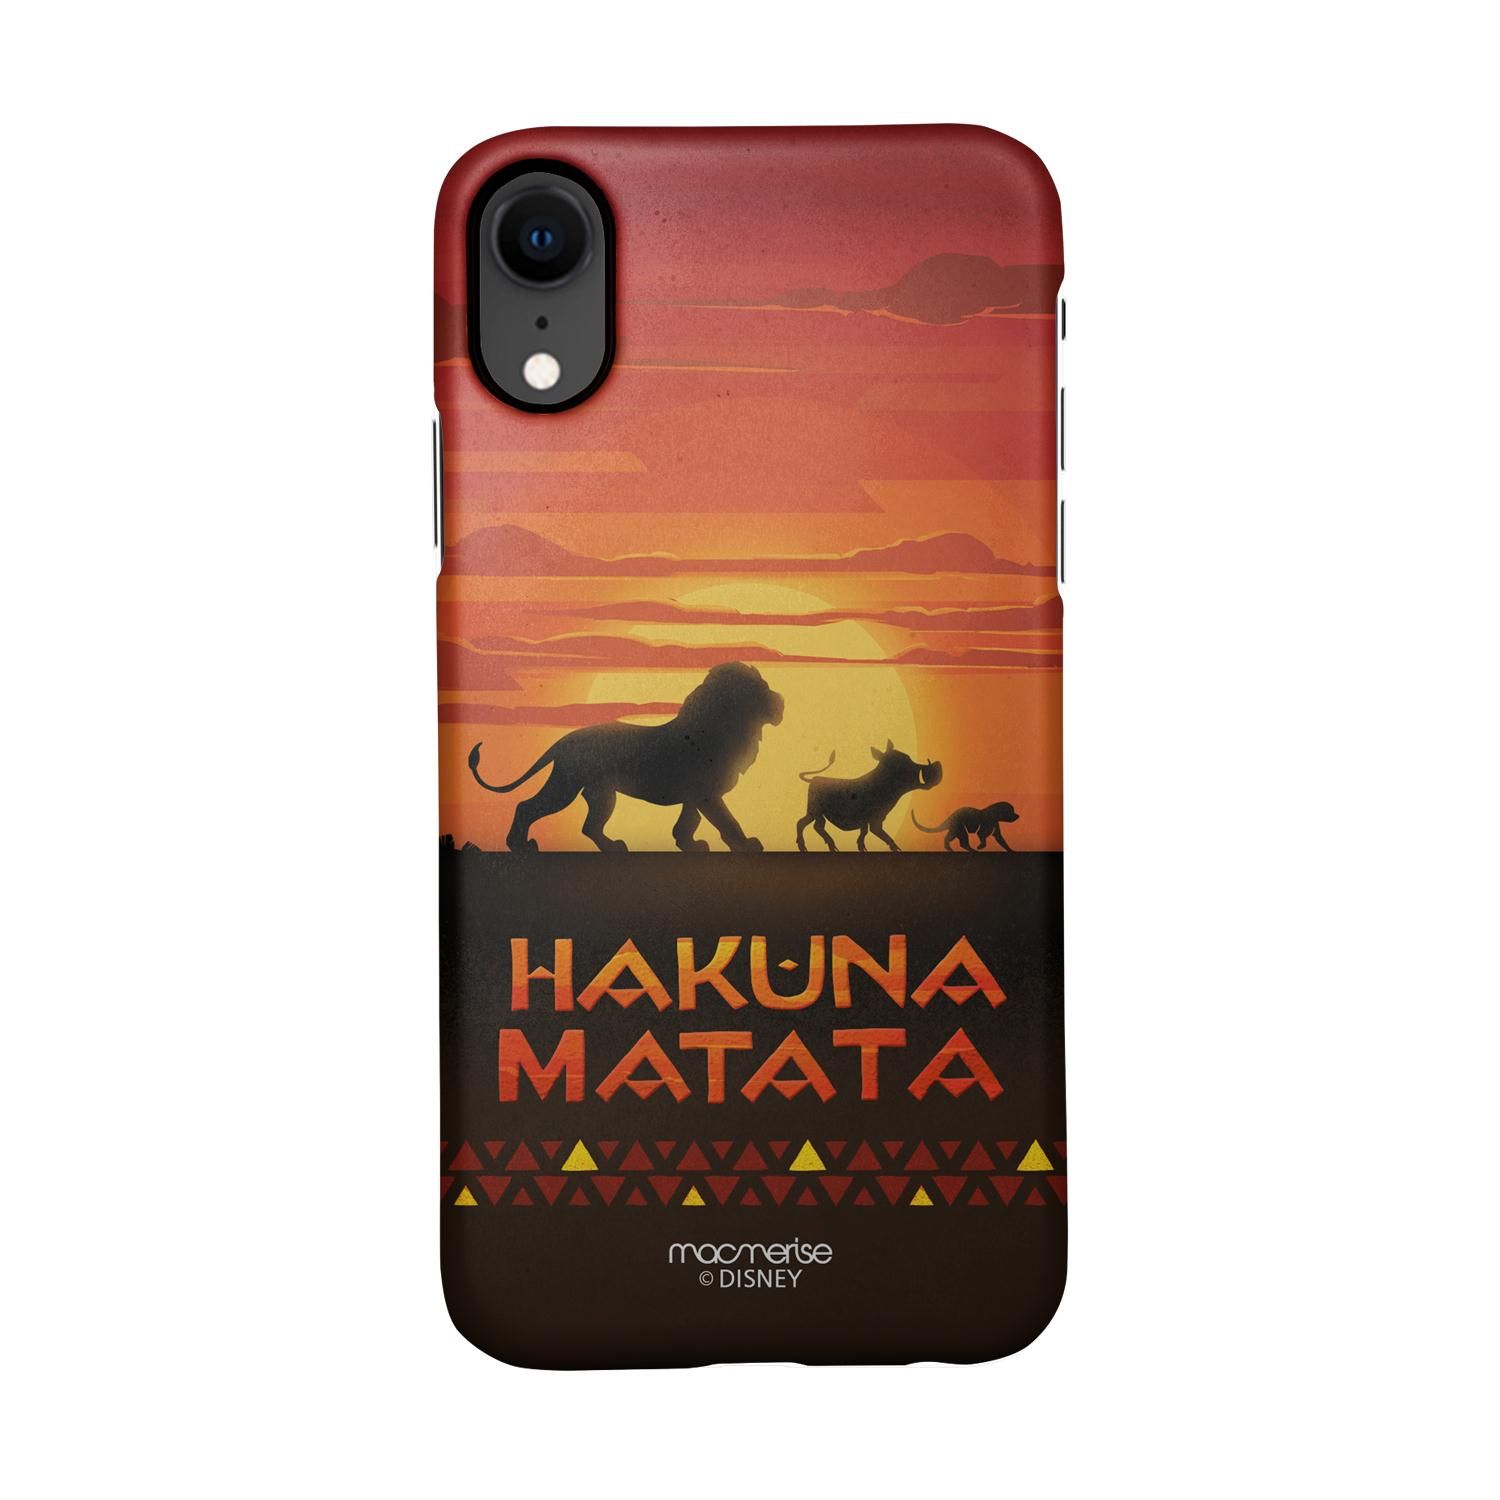 Buy Hakuna Matata - Sleek Phone Case for iPhone XR Online